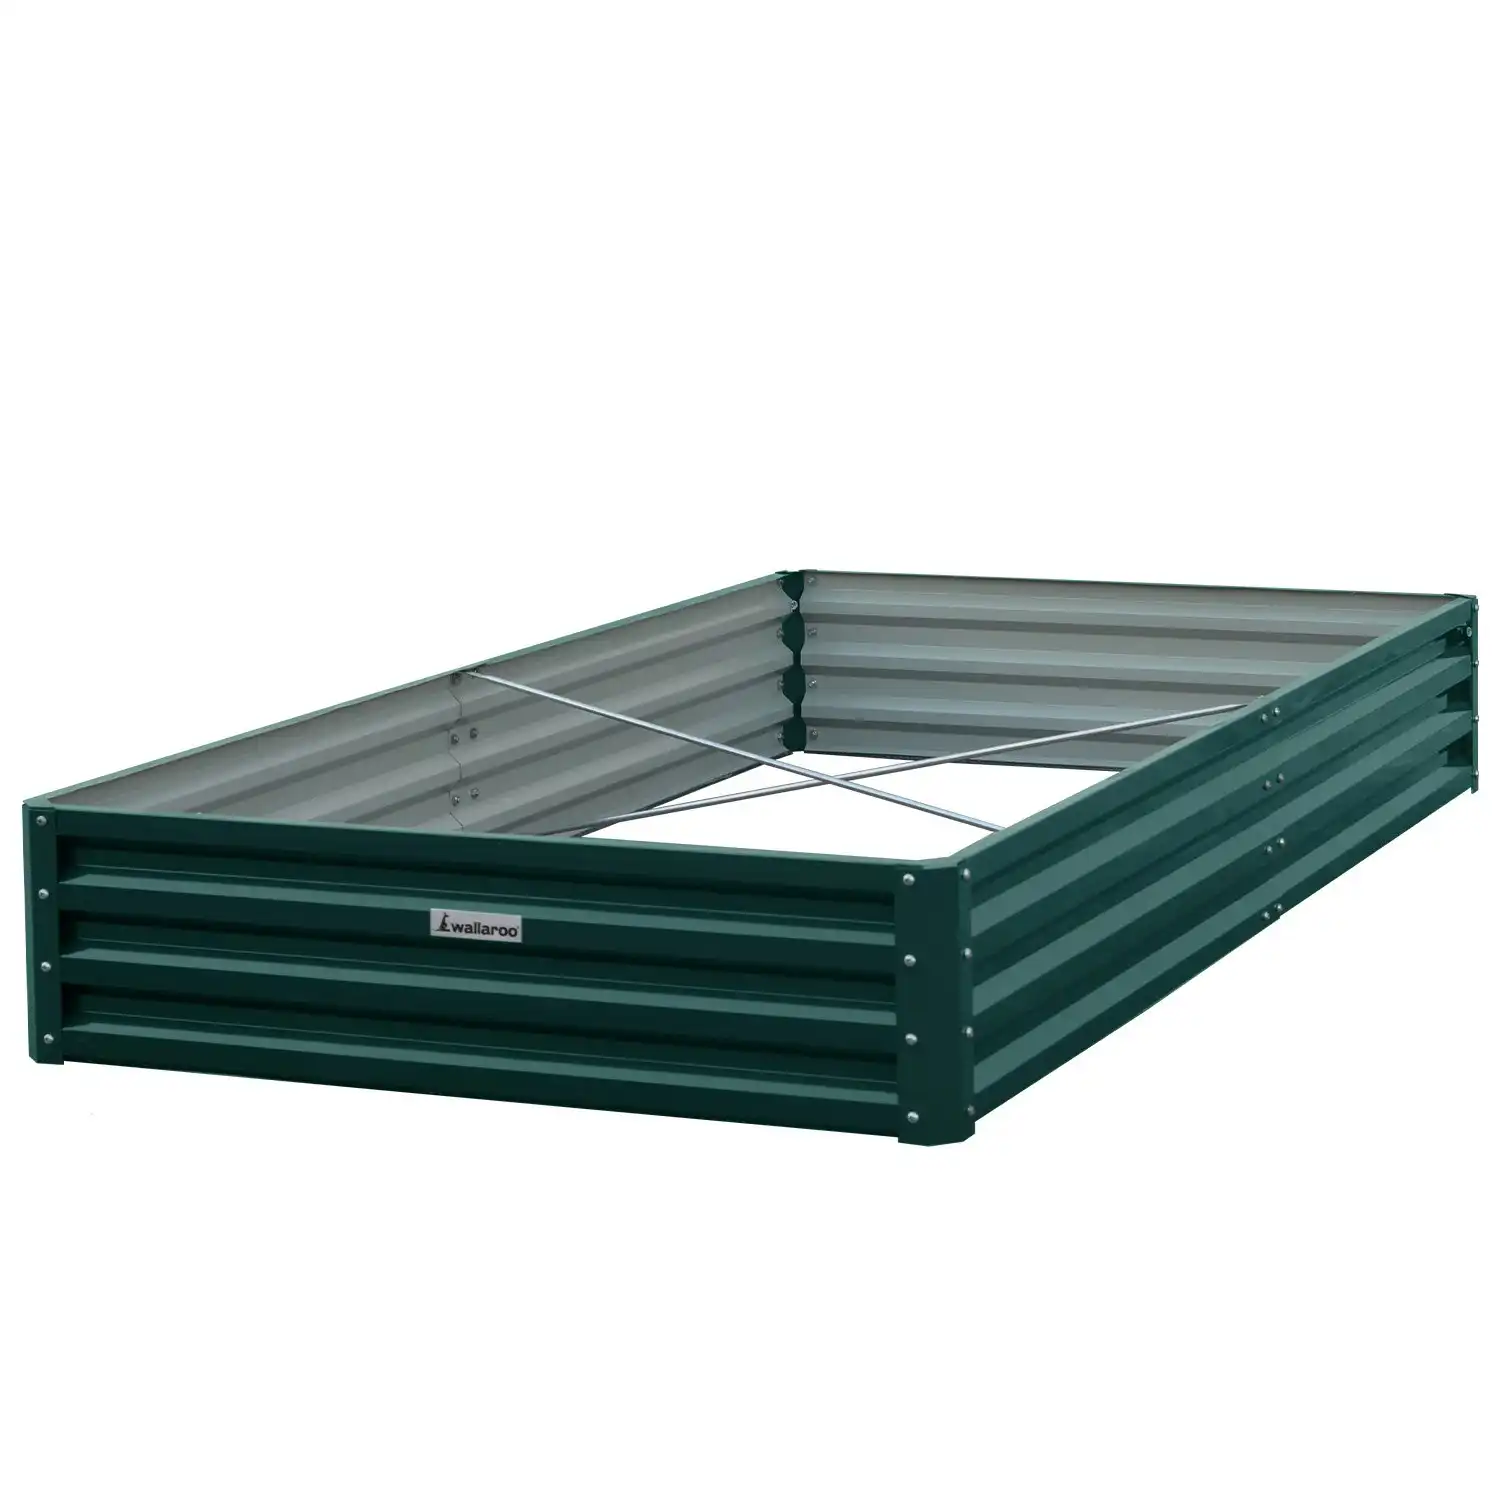 Wallaroo 240 x 120 x 30cm Galvanized Steel Garden Bed - Green